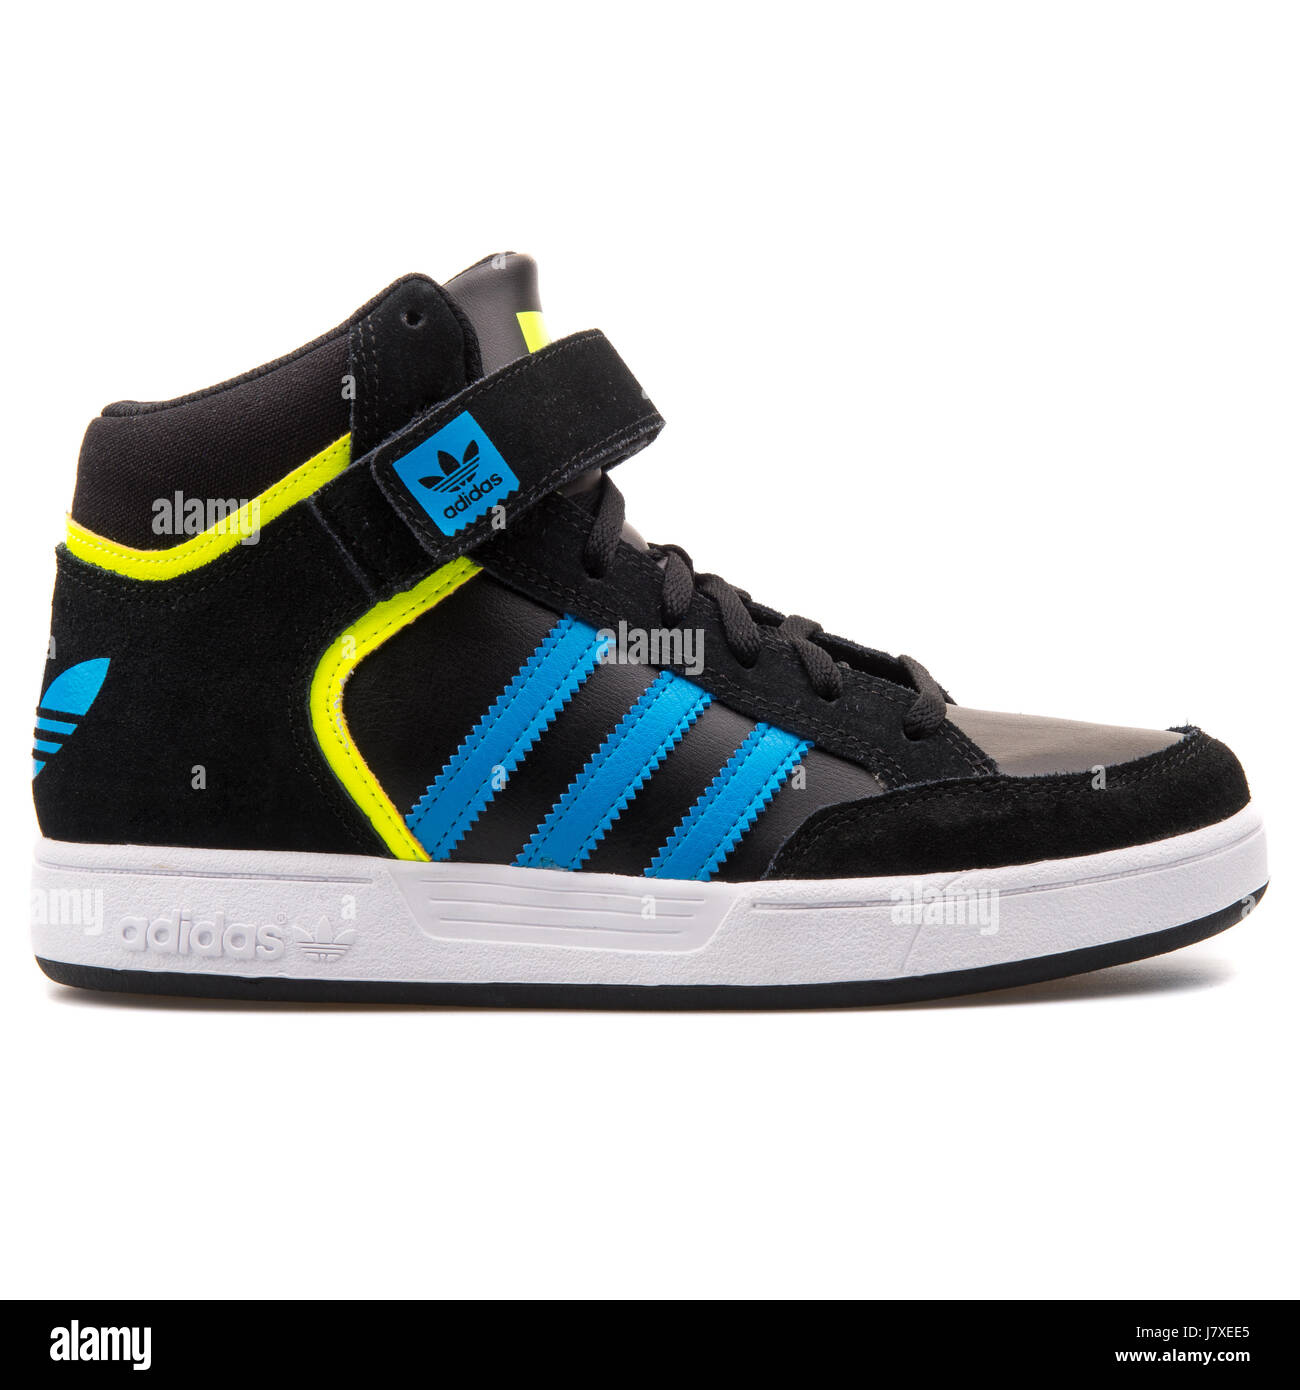 Obsesión Gracias por tu ayuda Por separado Adidas Varial Mid J Kids Black Sneakers - Q16697 Stock Photo - Alamy